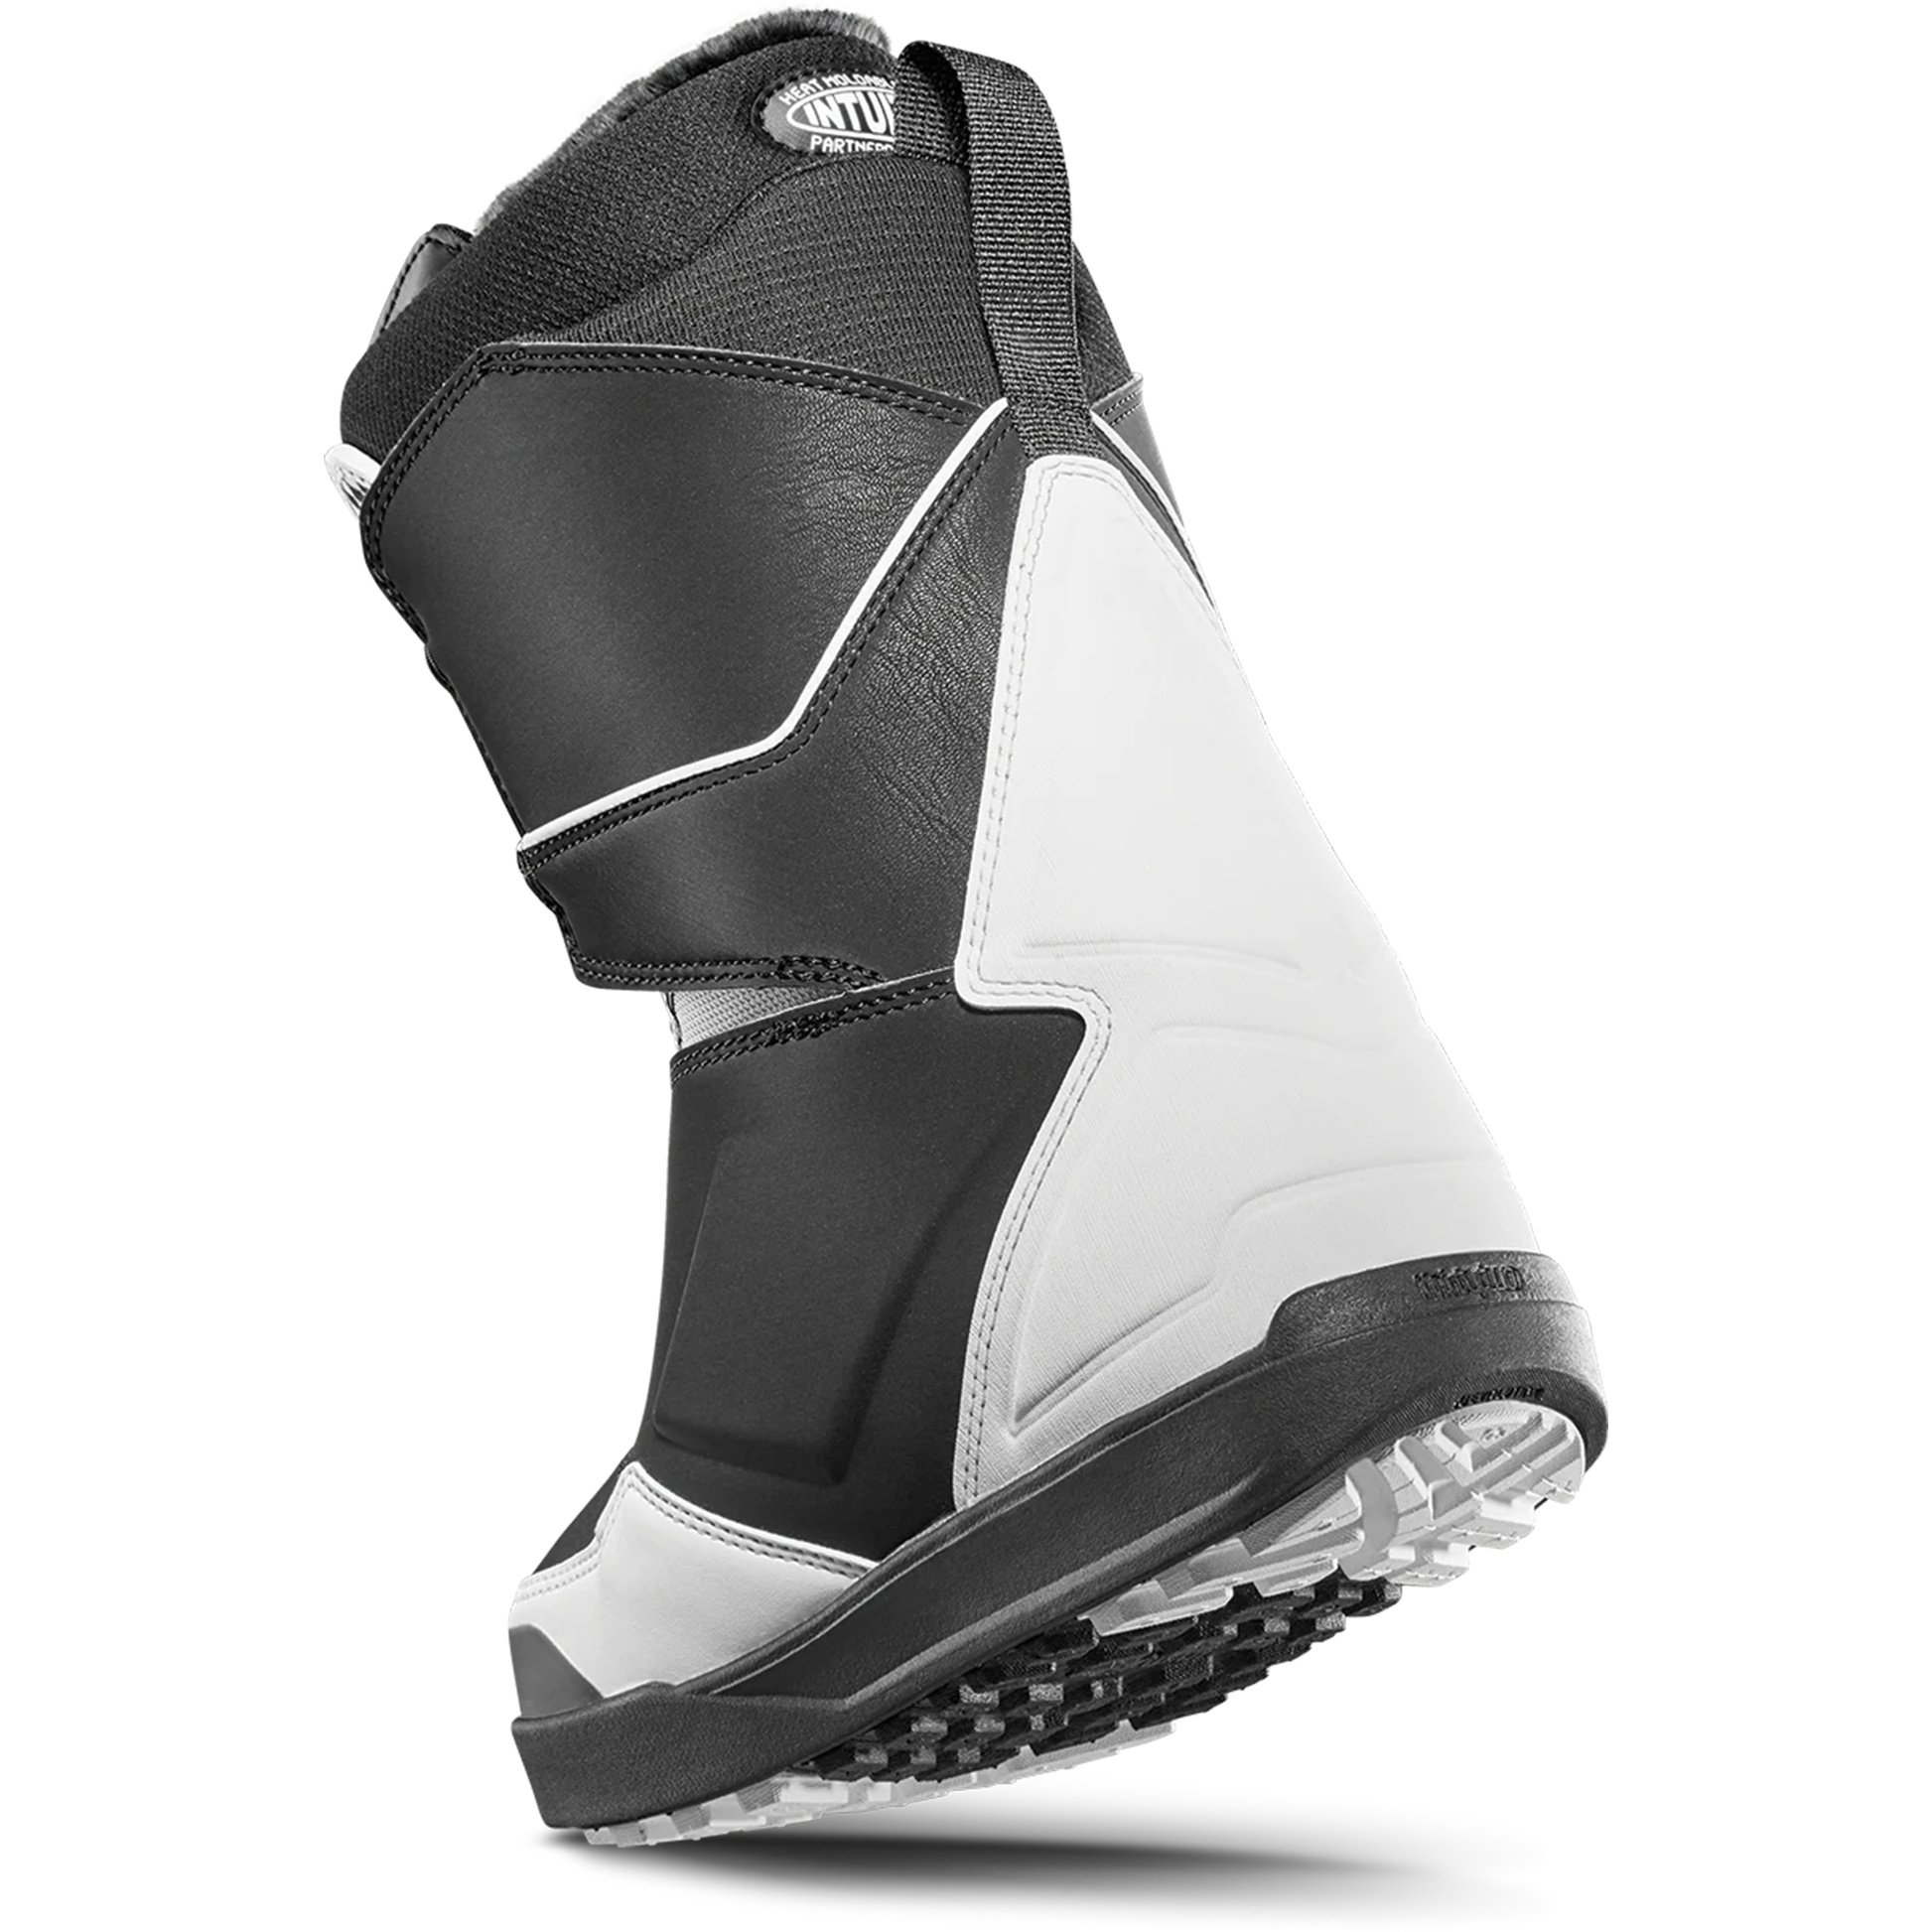 ThirtyTwo Women's Lashed Melancon Double BOA Snowboard Boots Black White Snowboard Boots